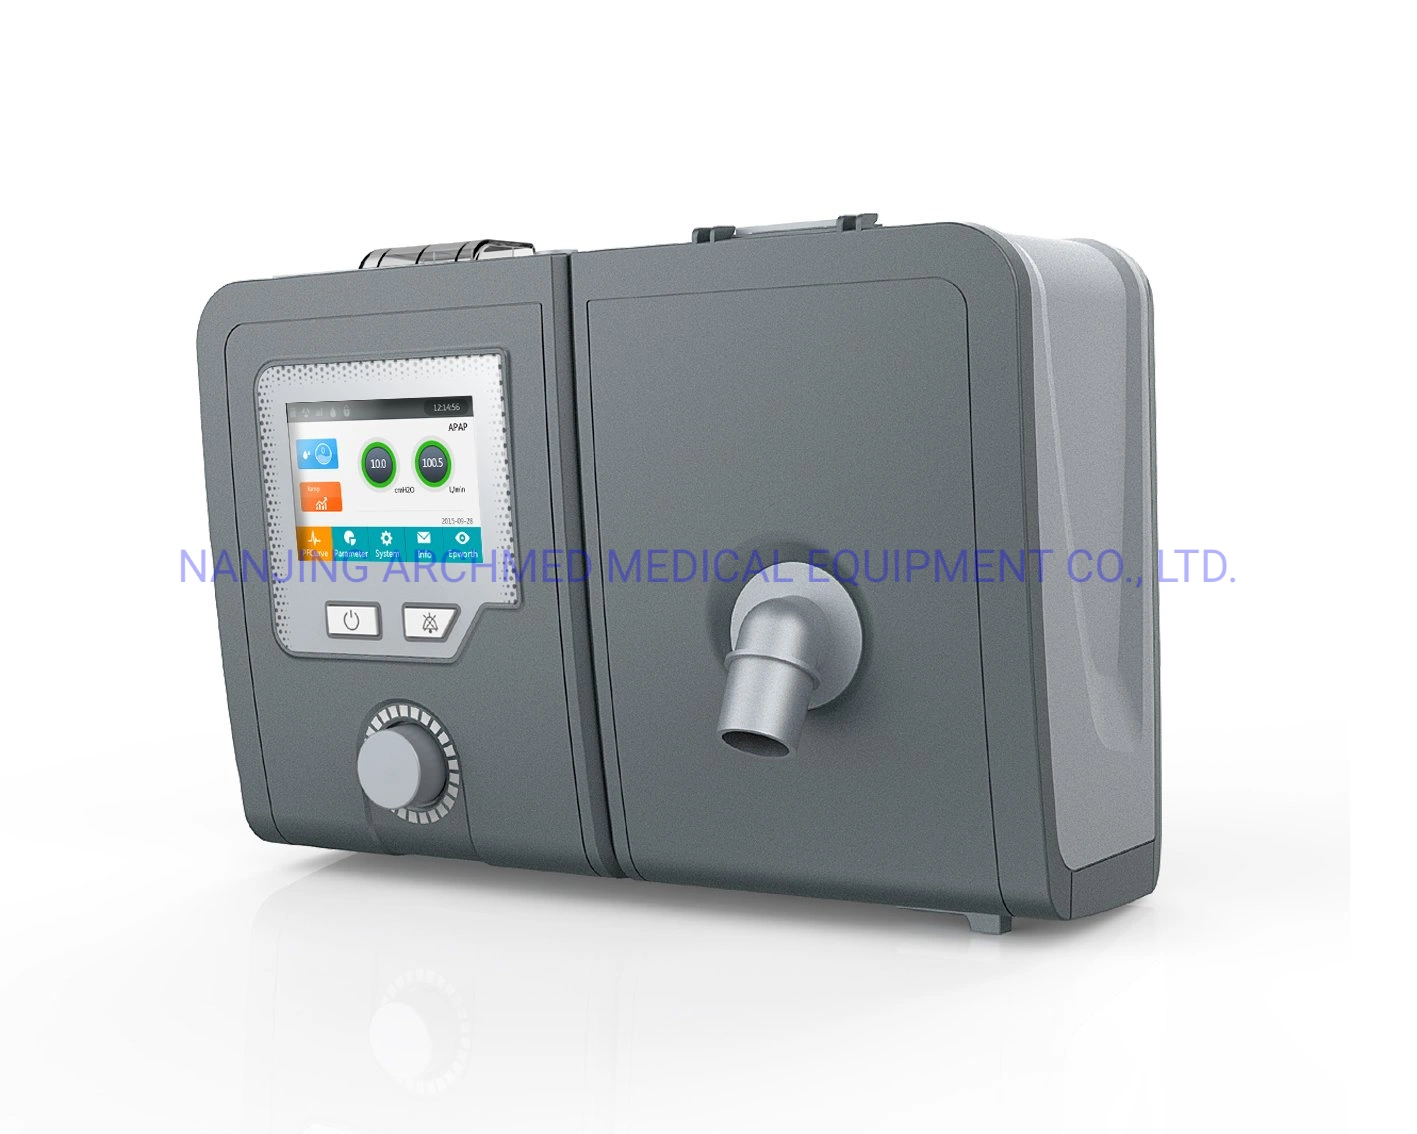 Medical Equipment Portable CPAP Breathing Machine for Sleep Apnea Treatment